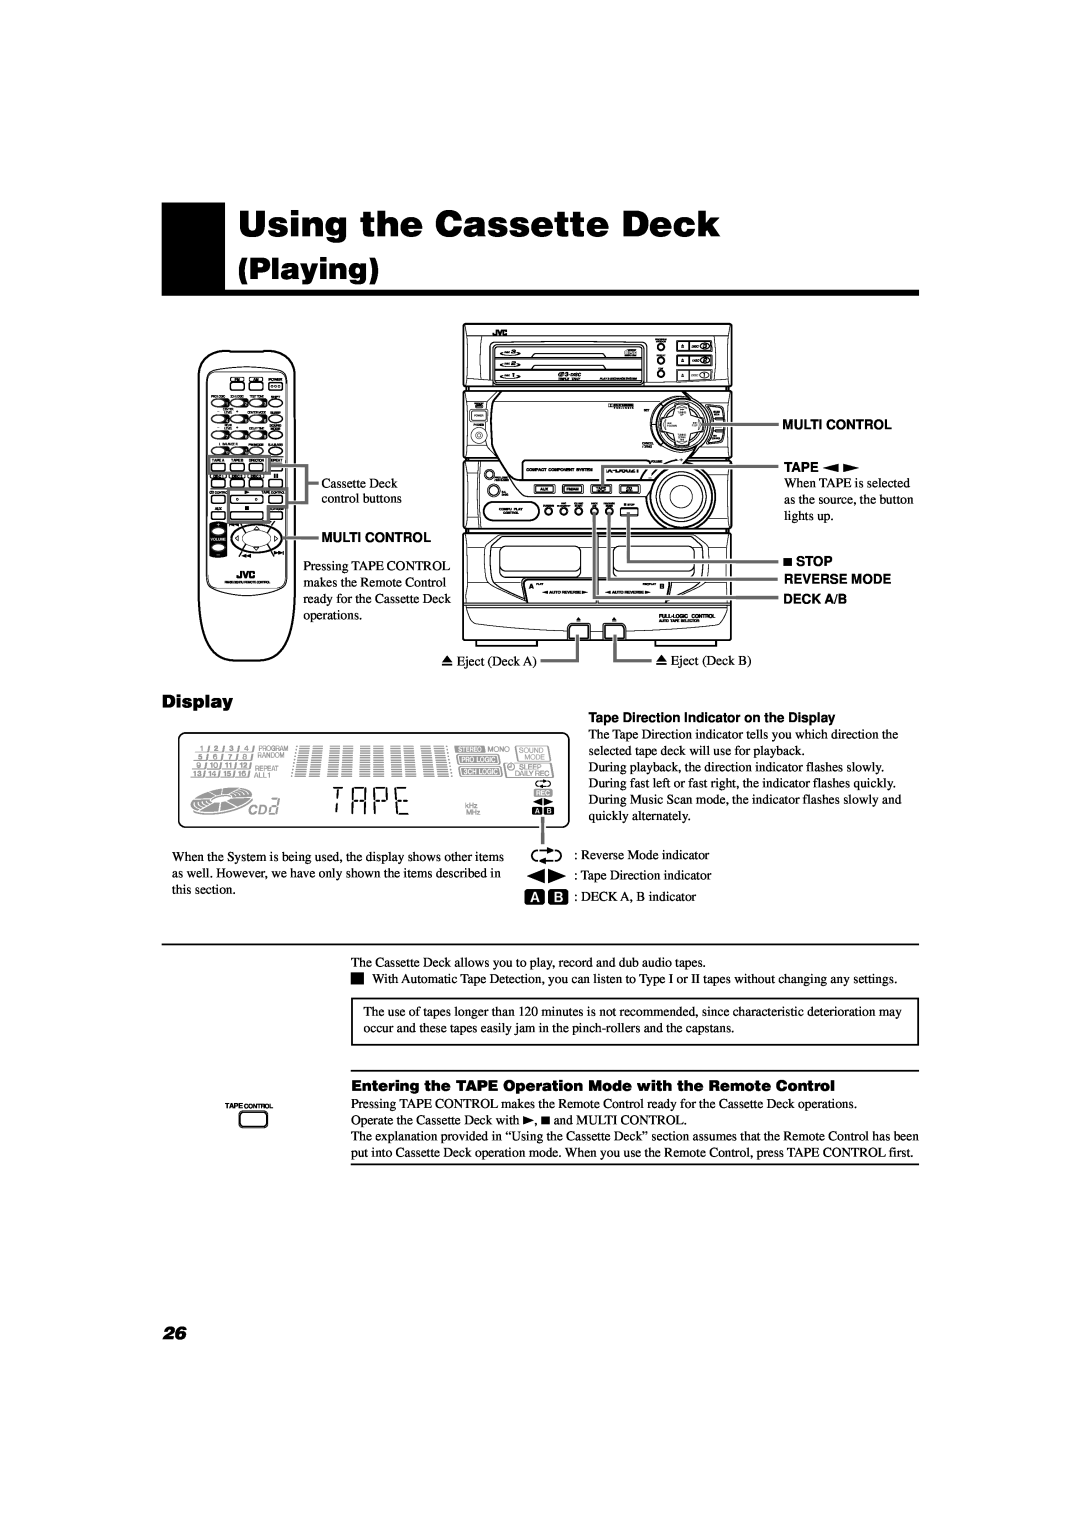 JVC MX-D602T manual Using the Cassette Deck, Playing, Multi Control Tape ª £, Stop Reverse Mode Deck A/B, Tape Control 